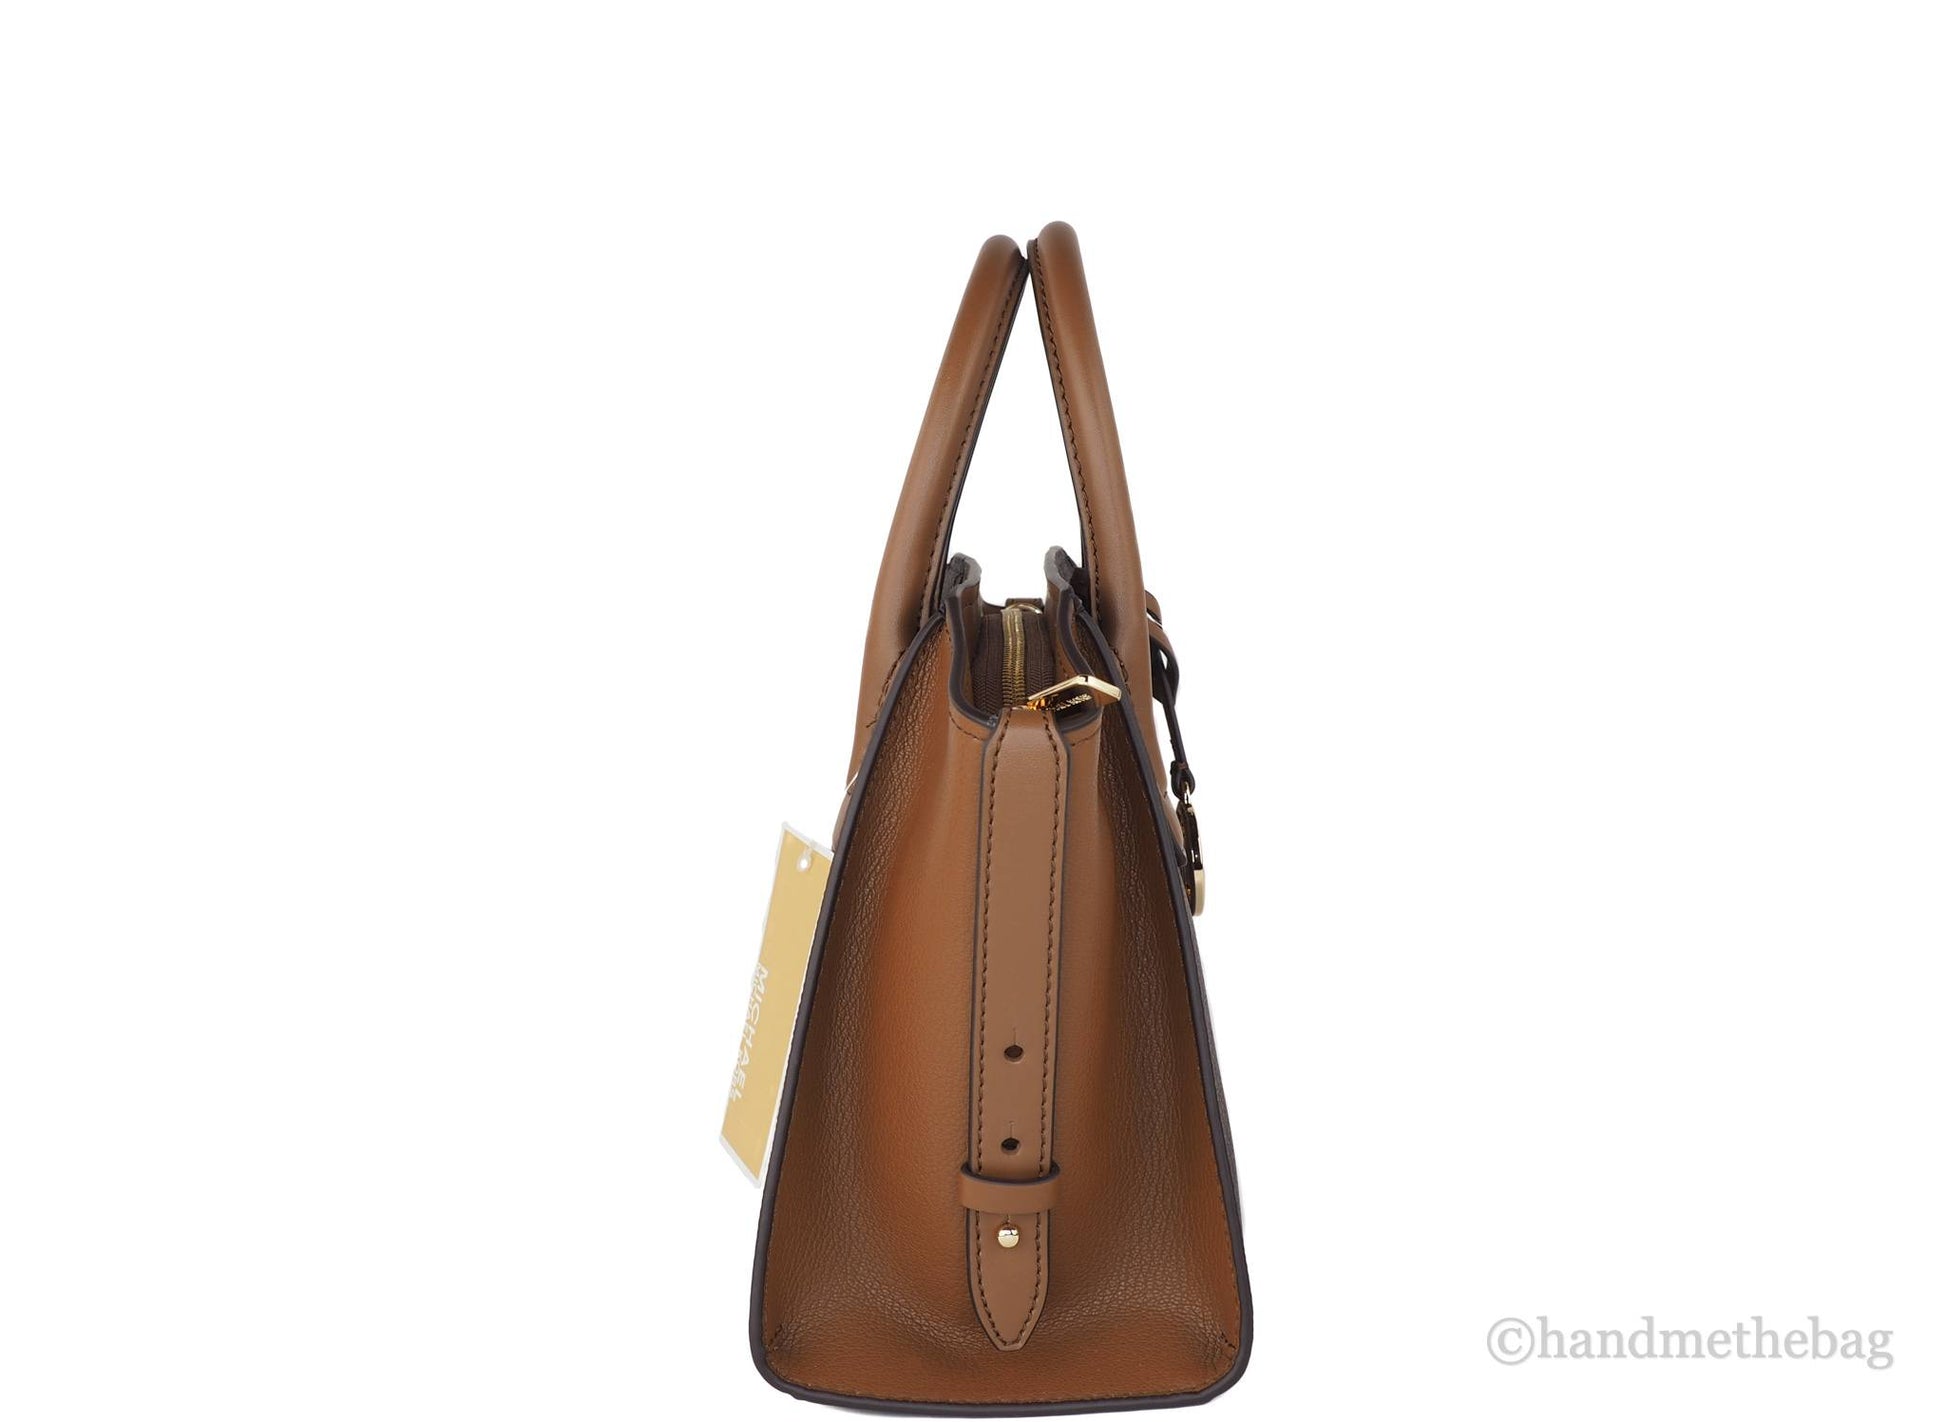 Michael Kors avril brown pvc satchel bag side on white background